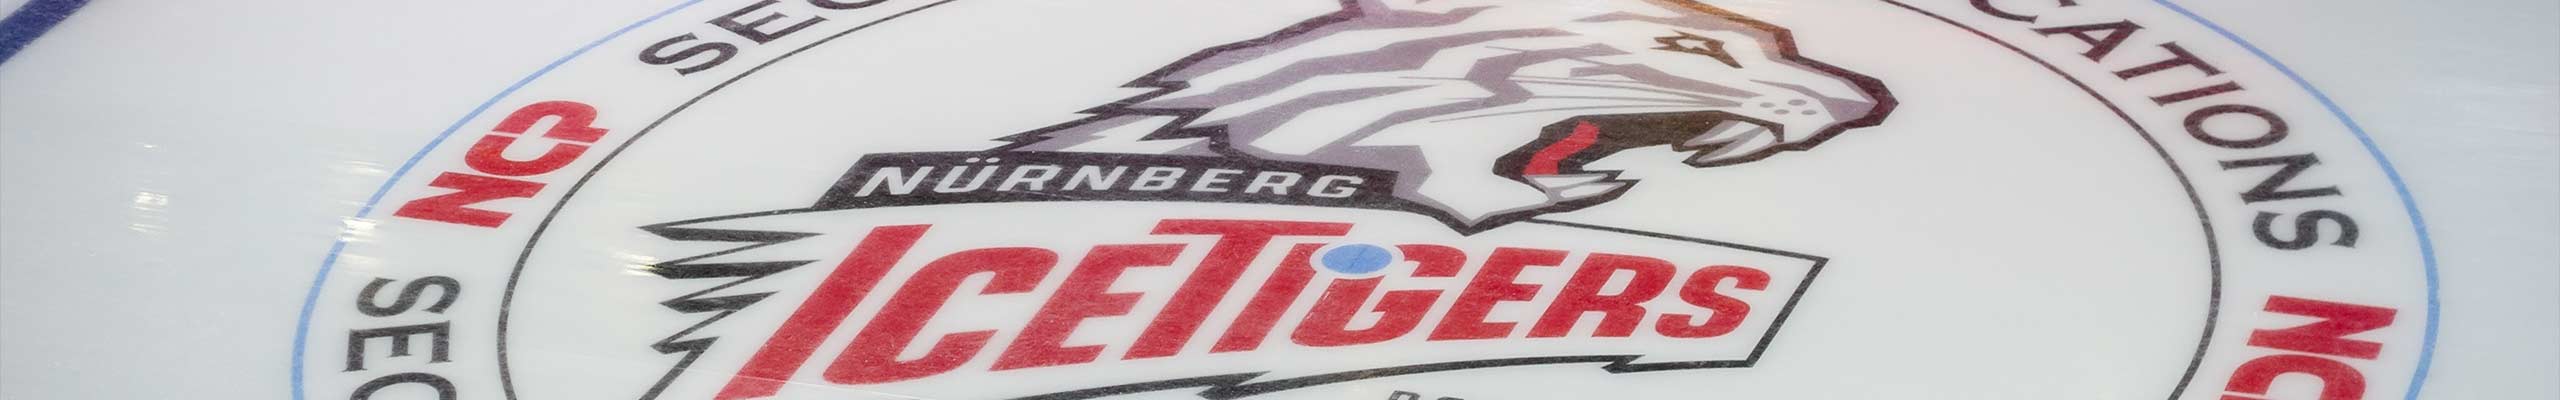 Tabelle Nürnberg Ice Tigers